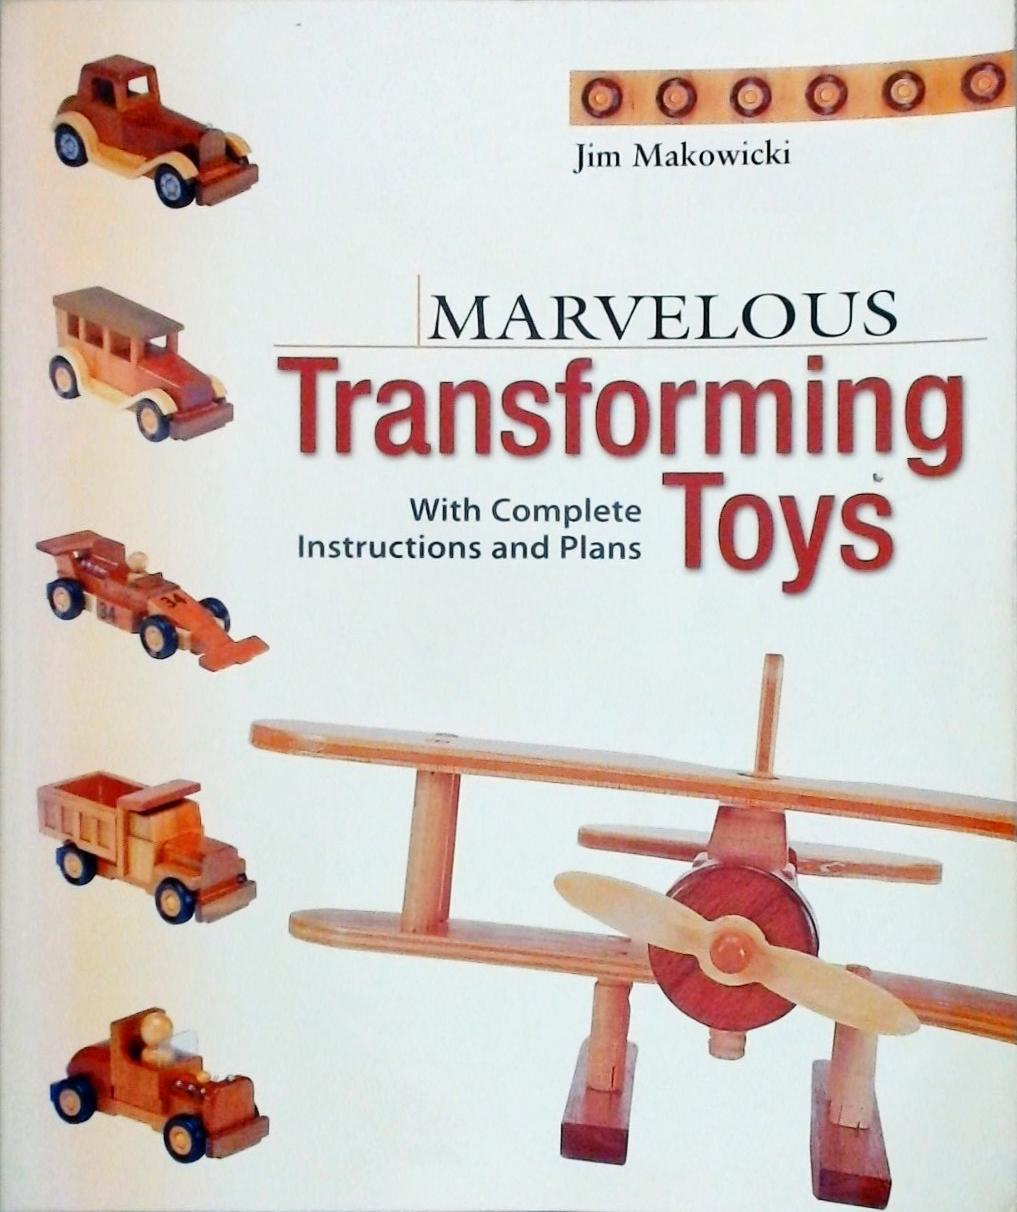 Marvelous Transforming Toys